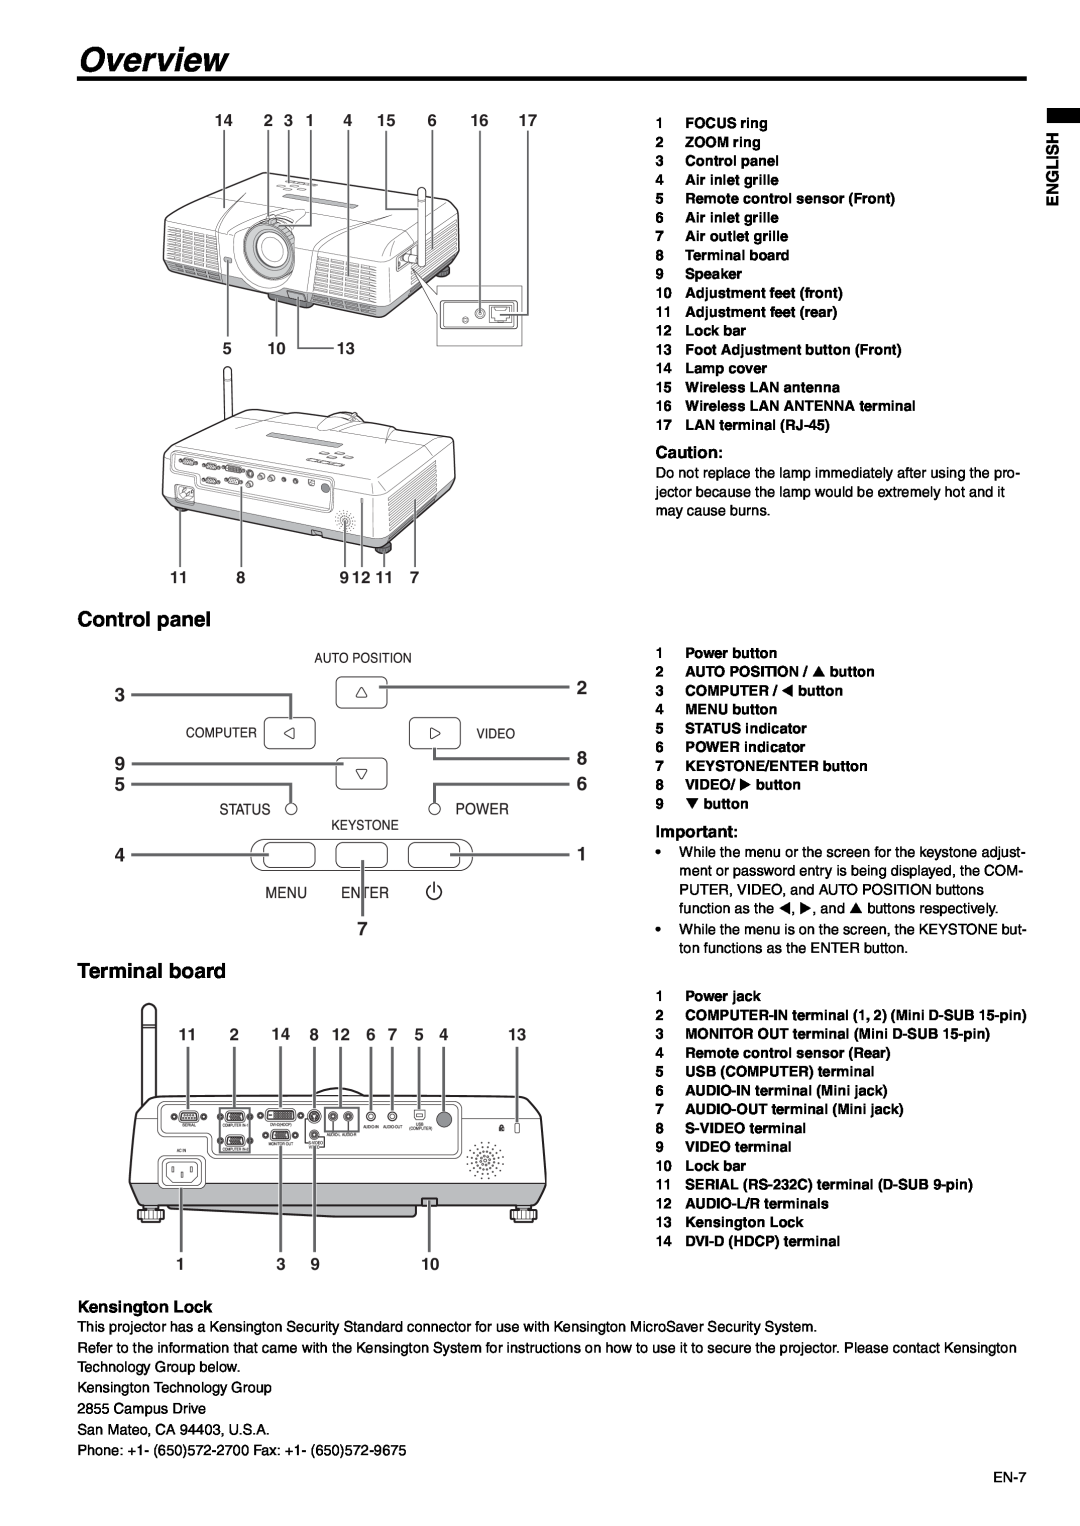 Mitsubishi Electronics EX53E, EX53U user manual Overview, Control panel, Terminal board, Kensington Lock, English 